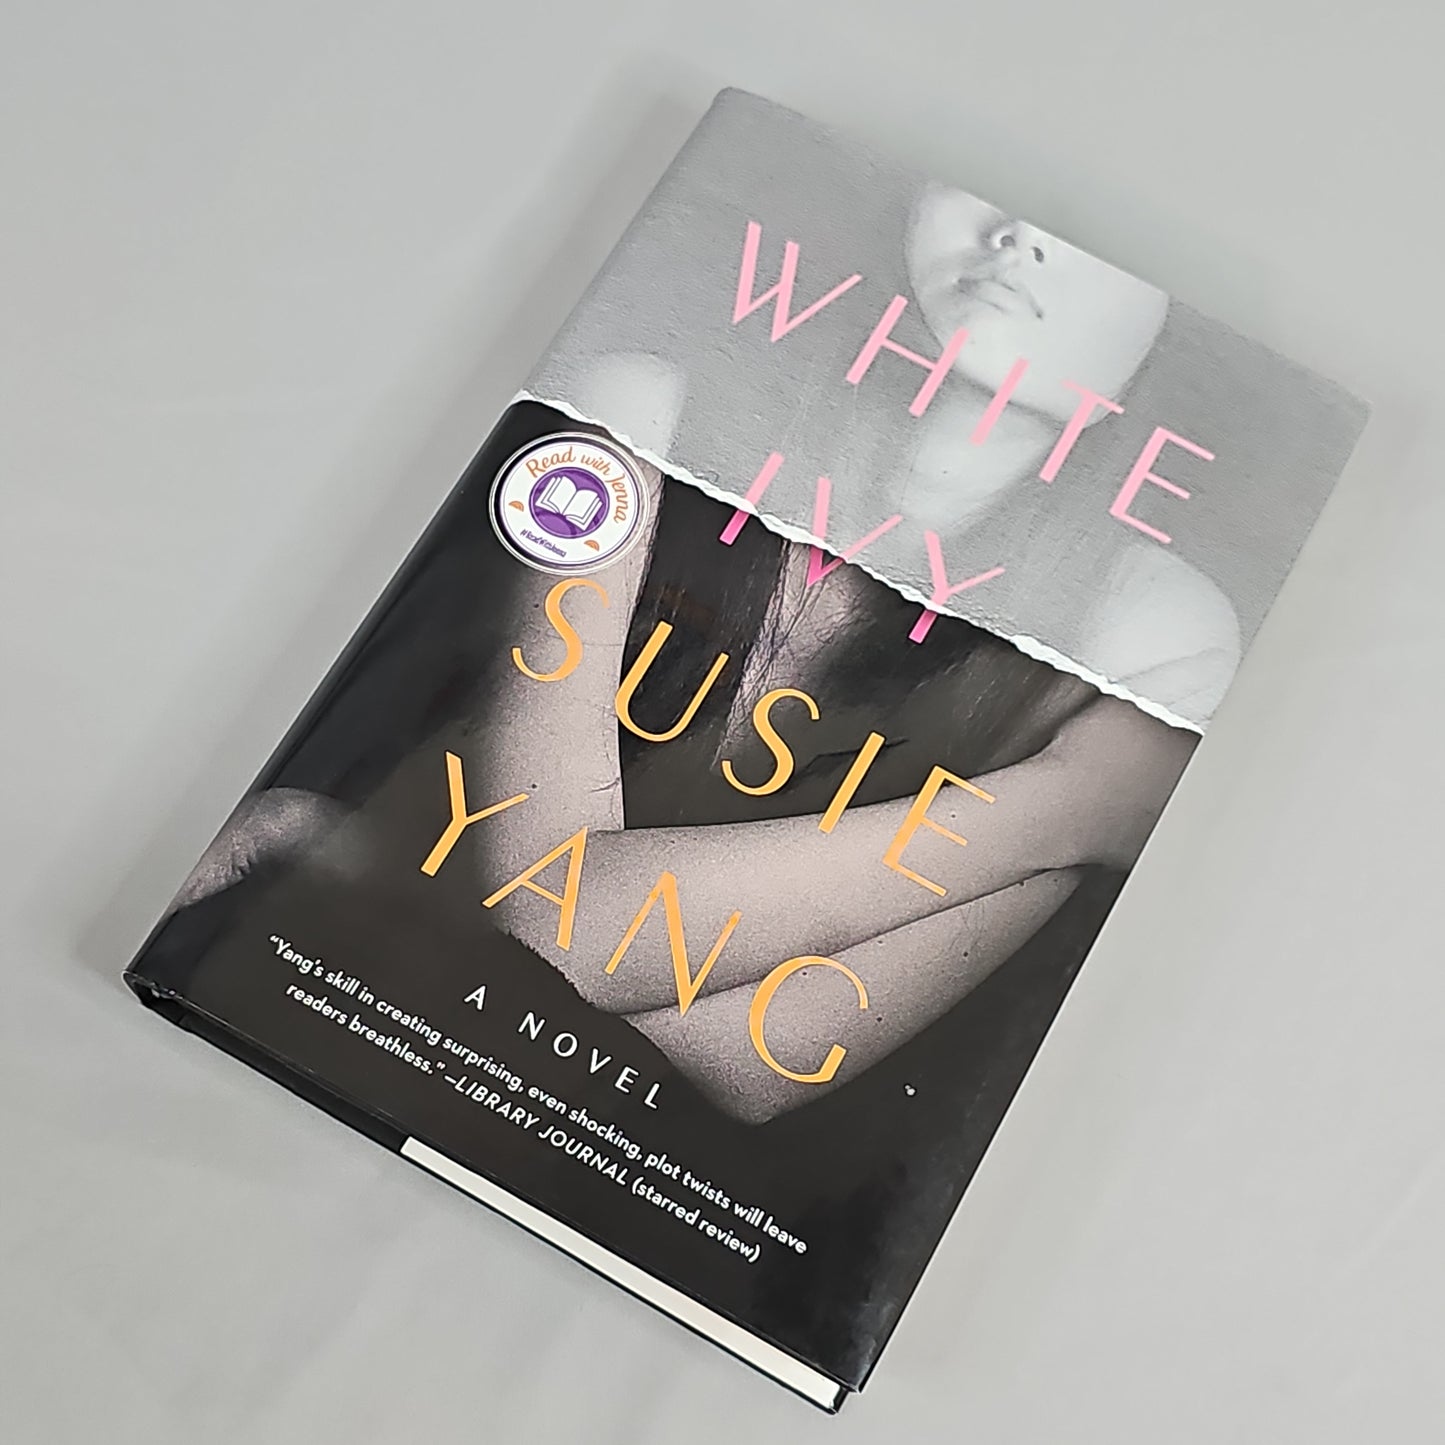 WHITE IVY by Susie Yang Book Hardback (New)